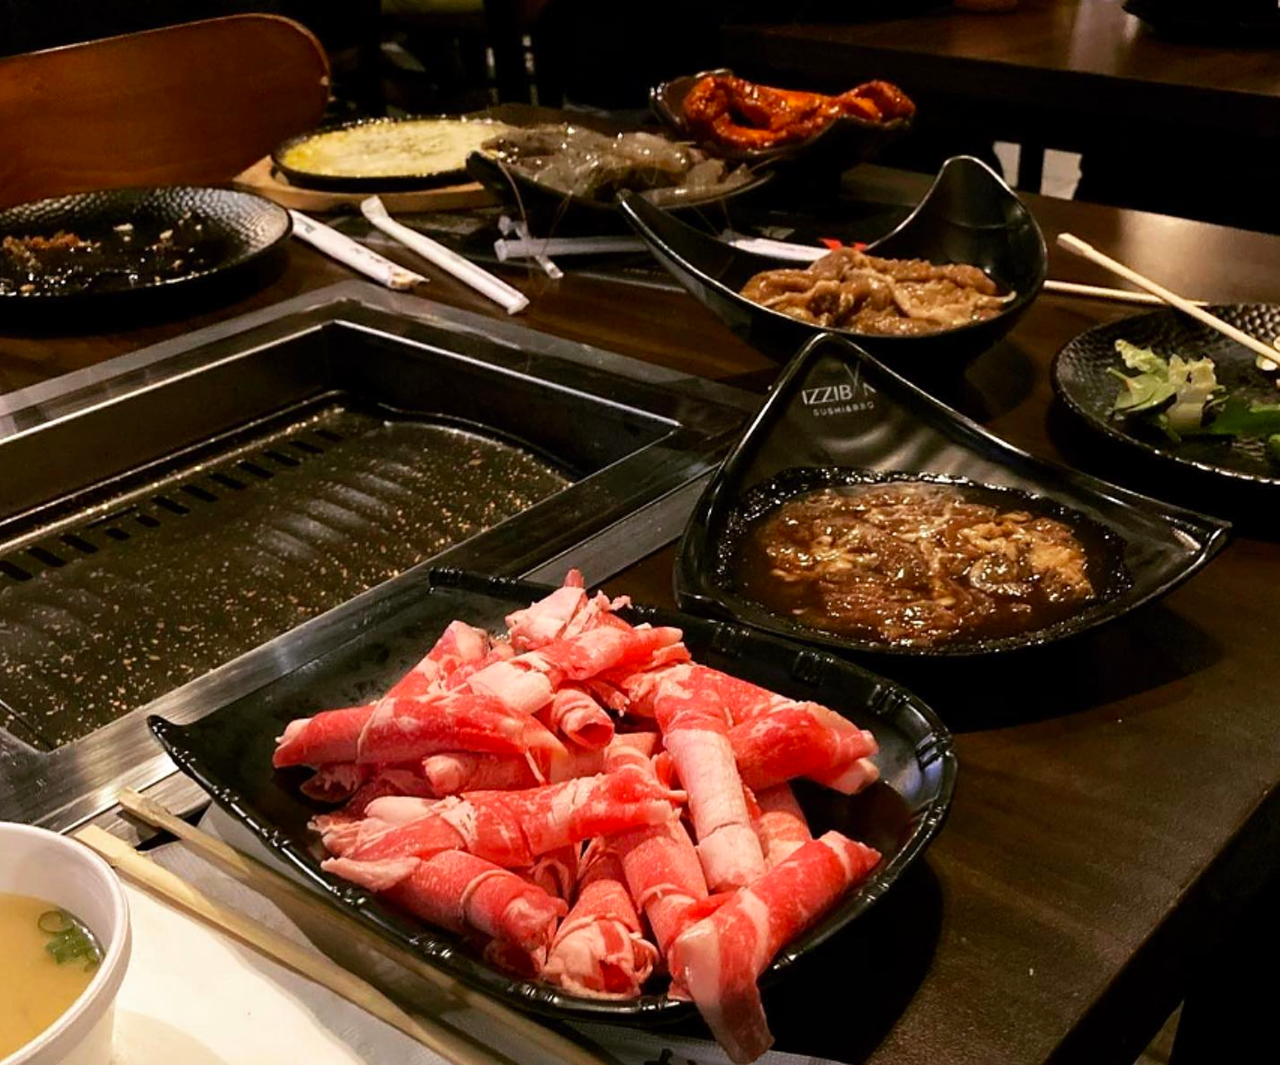 Best Korean Restaurant
Winner: Izziban Sushi and BBQ
Runners-up: Chi-kin, Shin Jung Korean